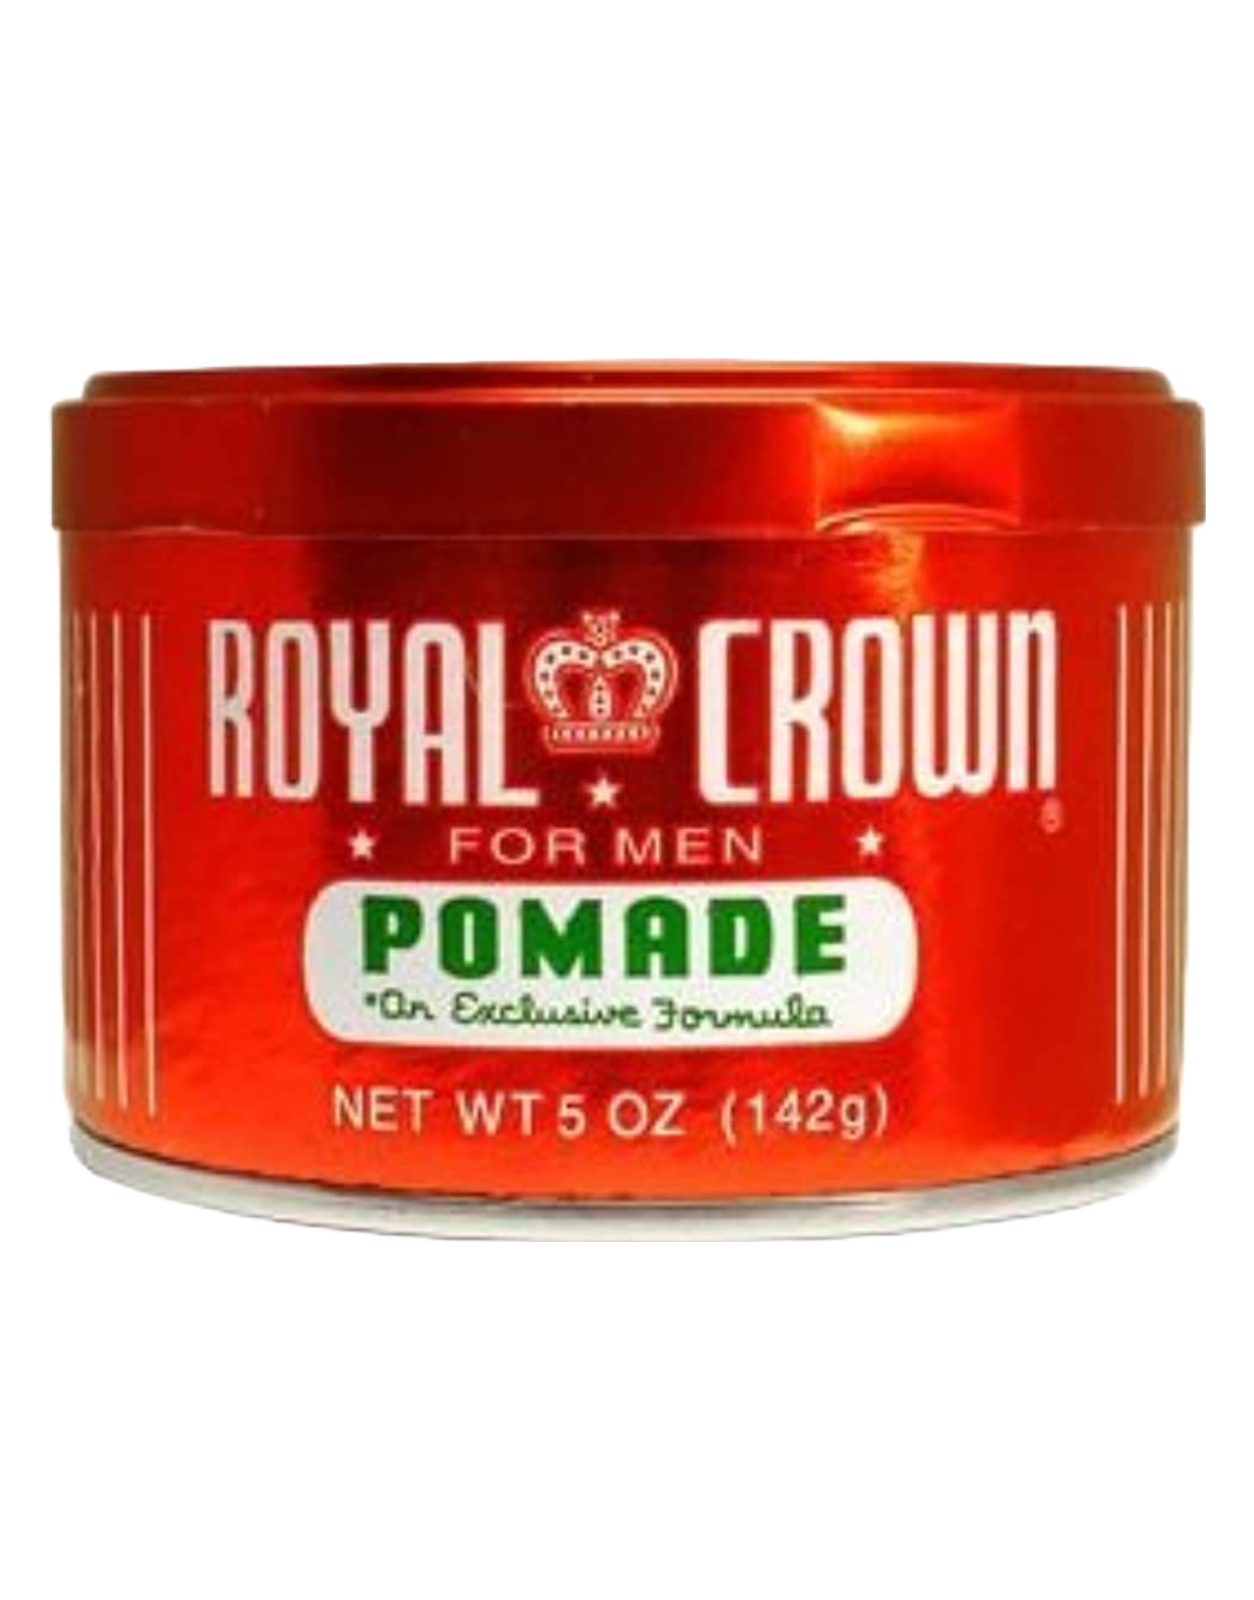 Royal Crowne - Pomade For Men